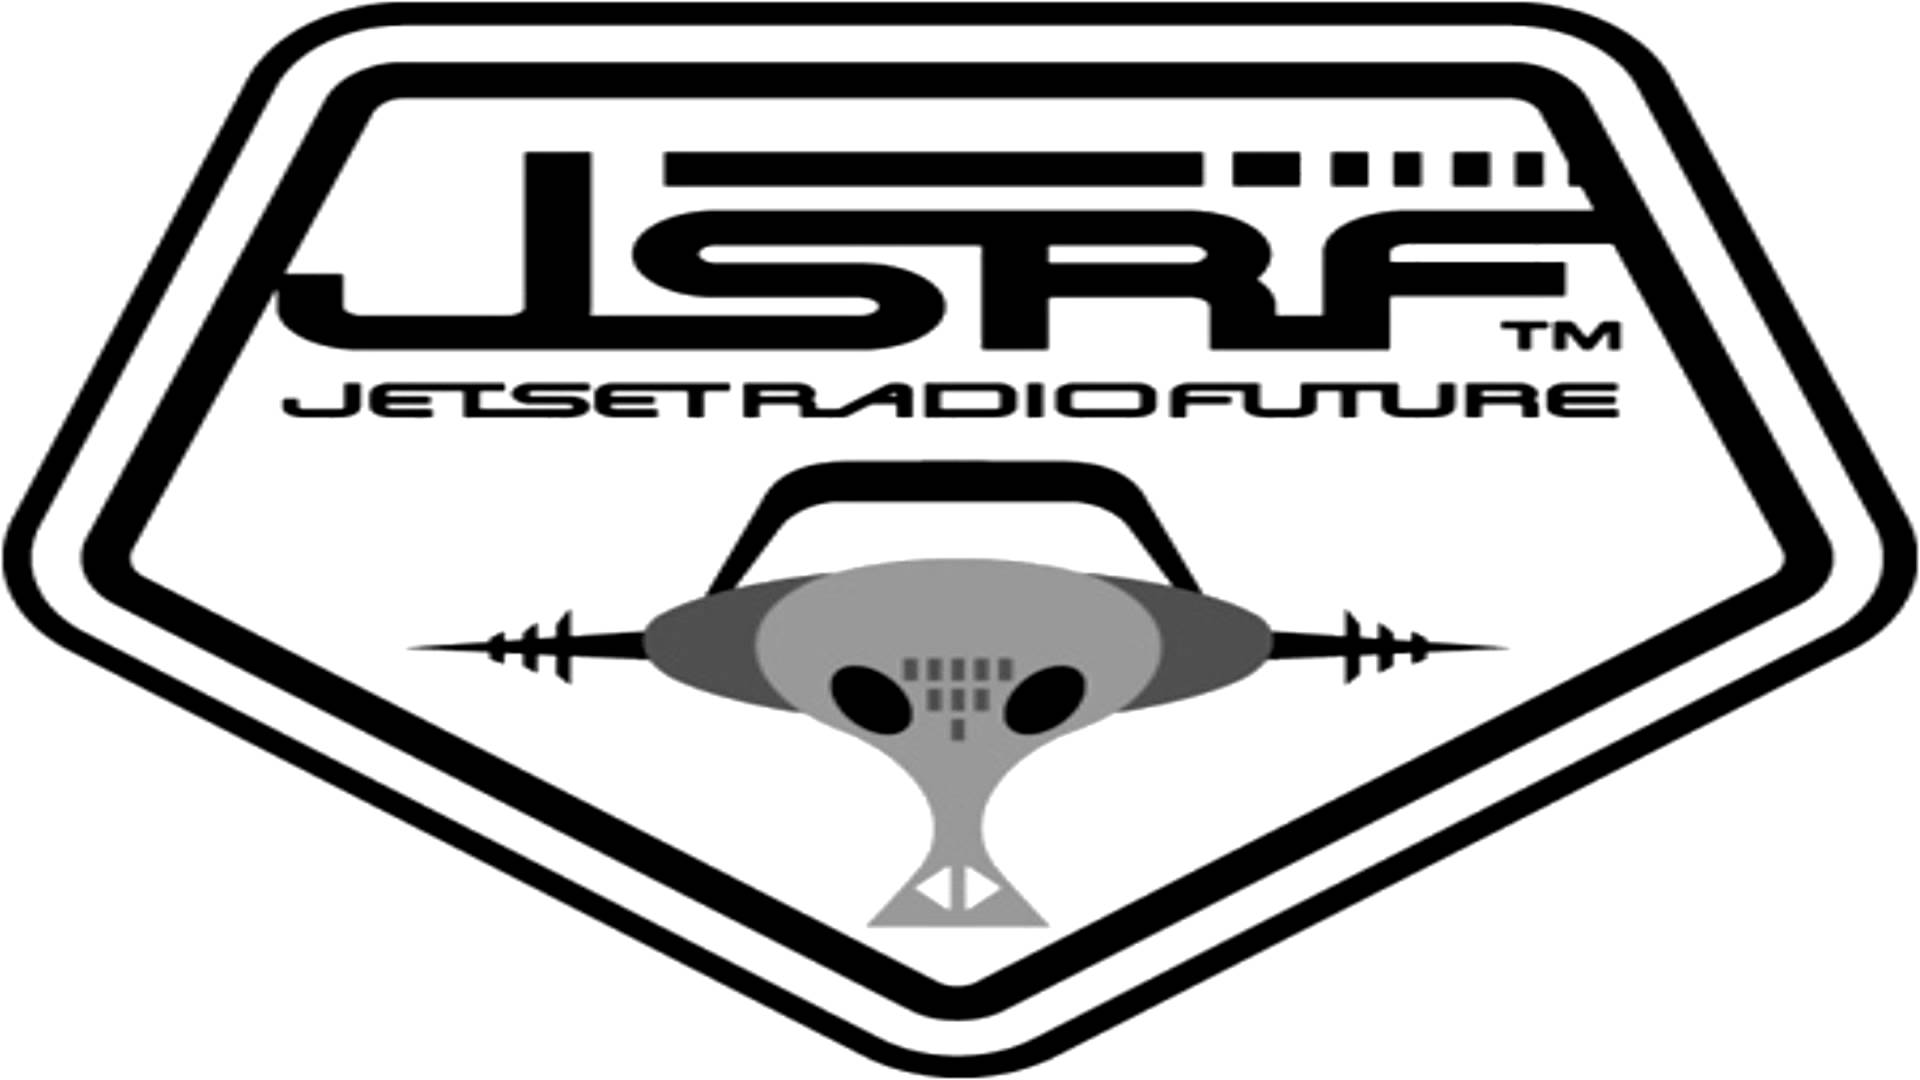 Avatar Jet Logo - Jet set radio future Logos